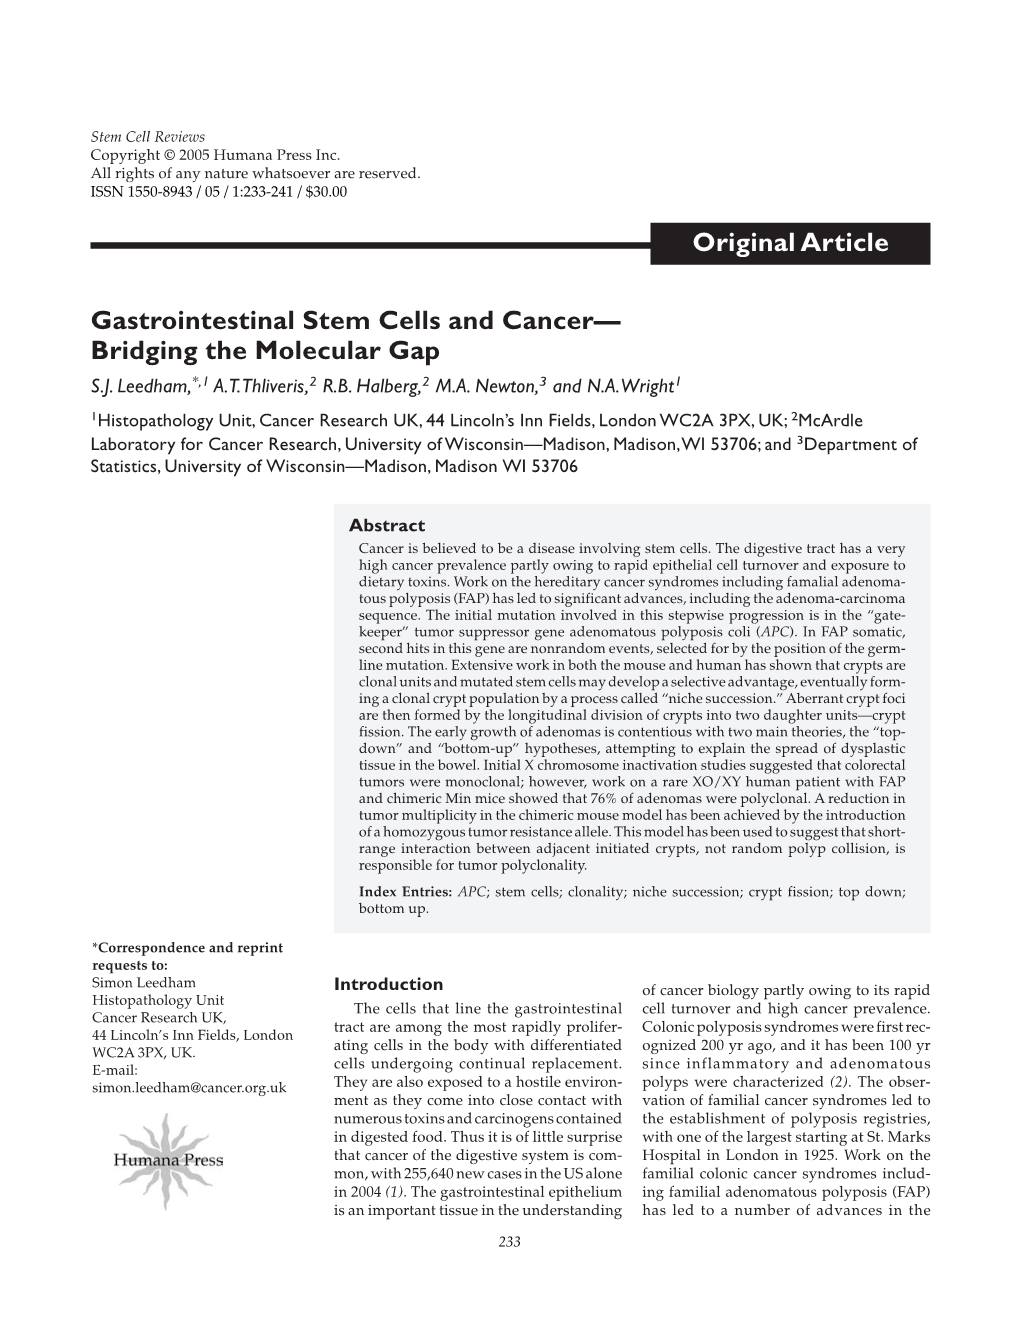 Original Article Gastrointestinal Stem Cells and Cancer